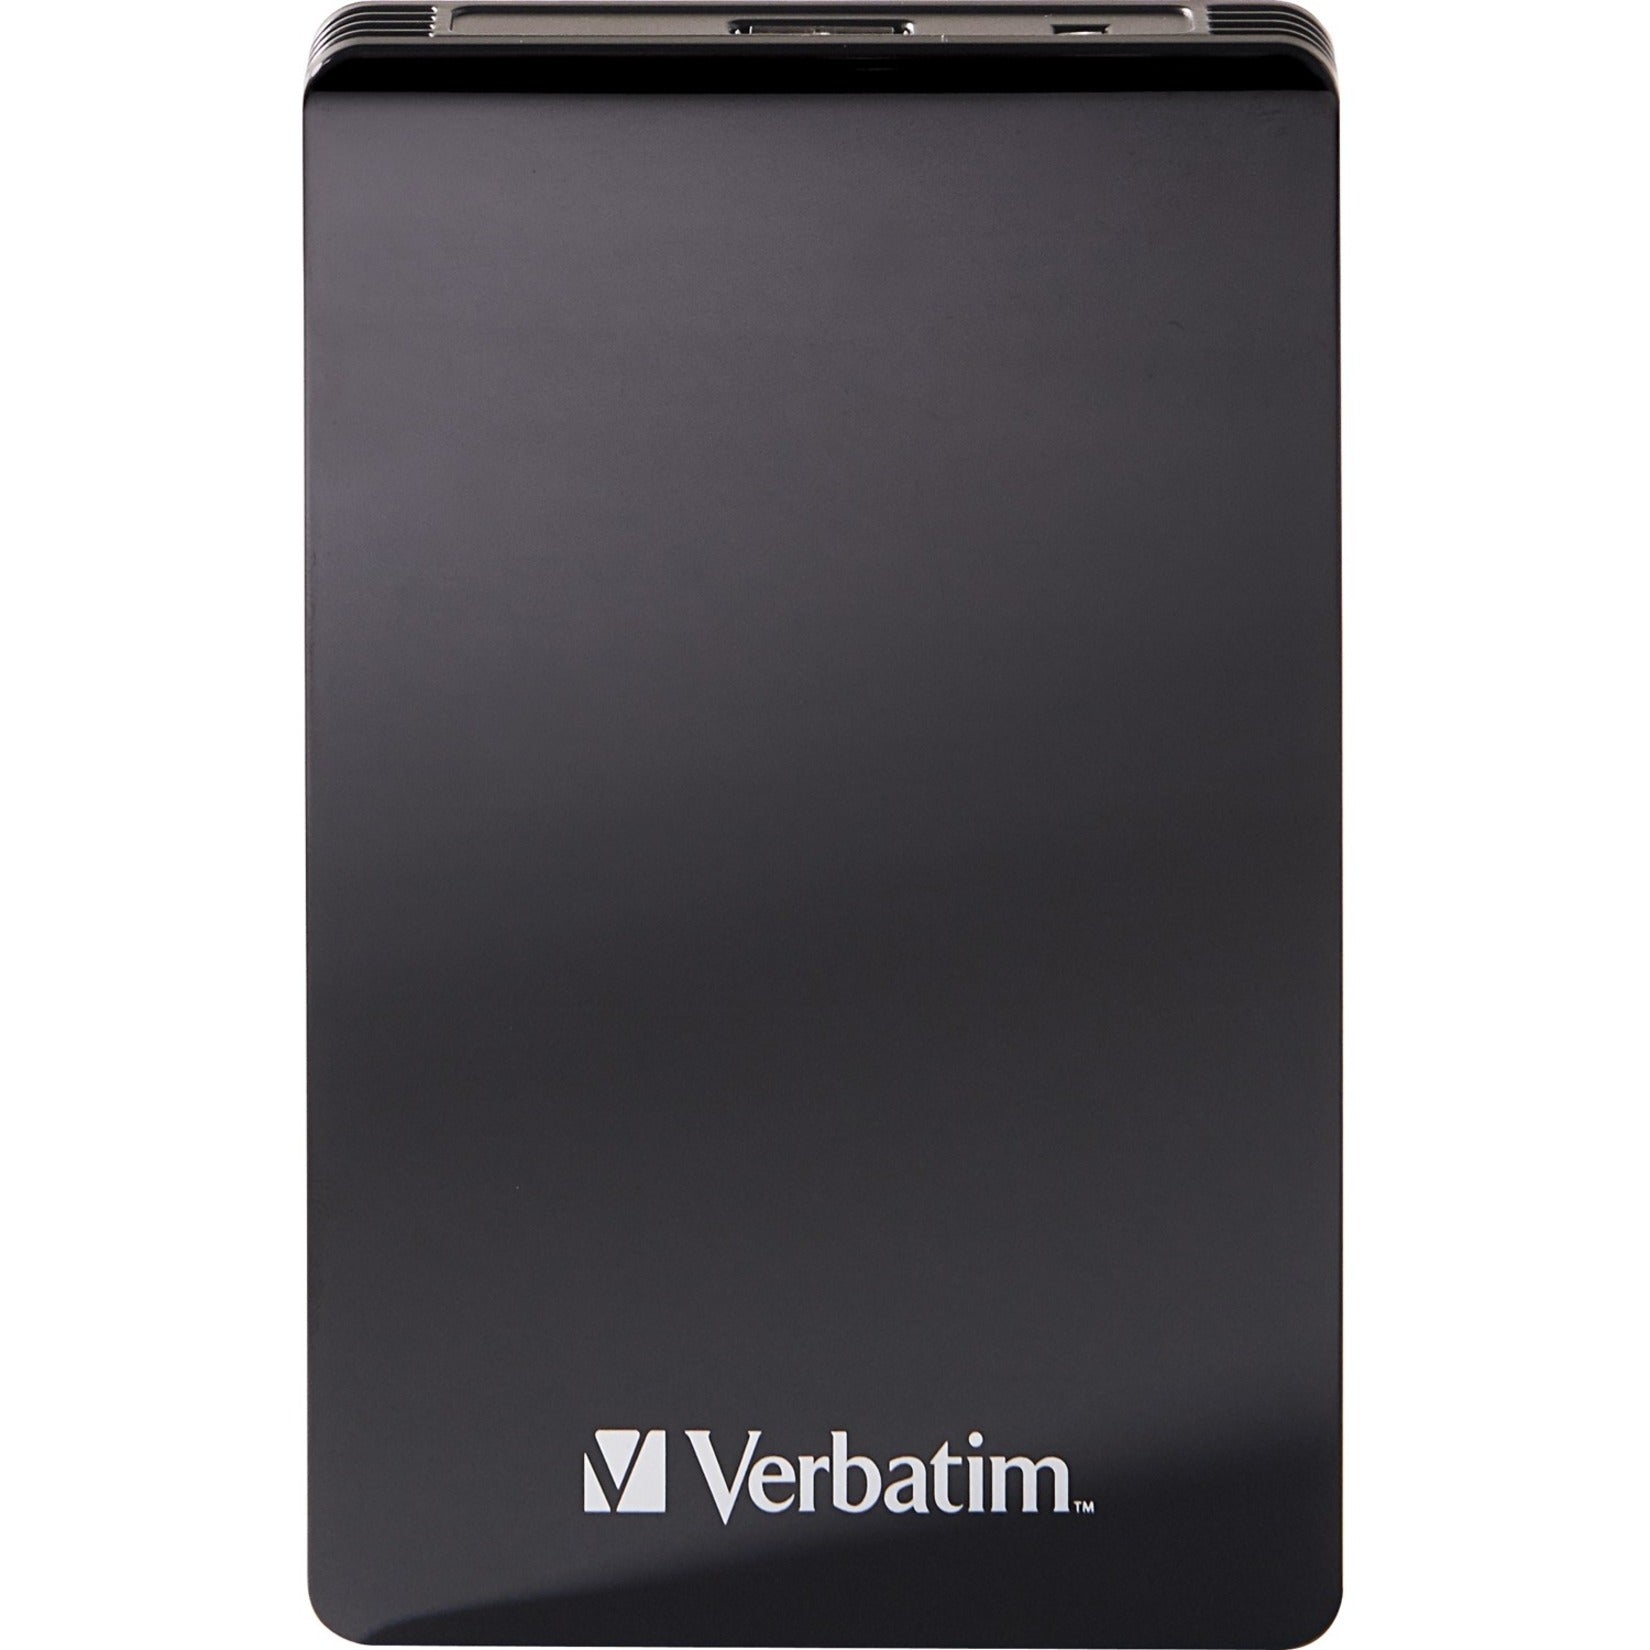 Verbatim 70383 Vx460 External SSD, USB 3.1 Gen 1 - Black, 512GB